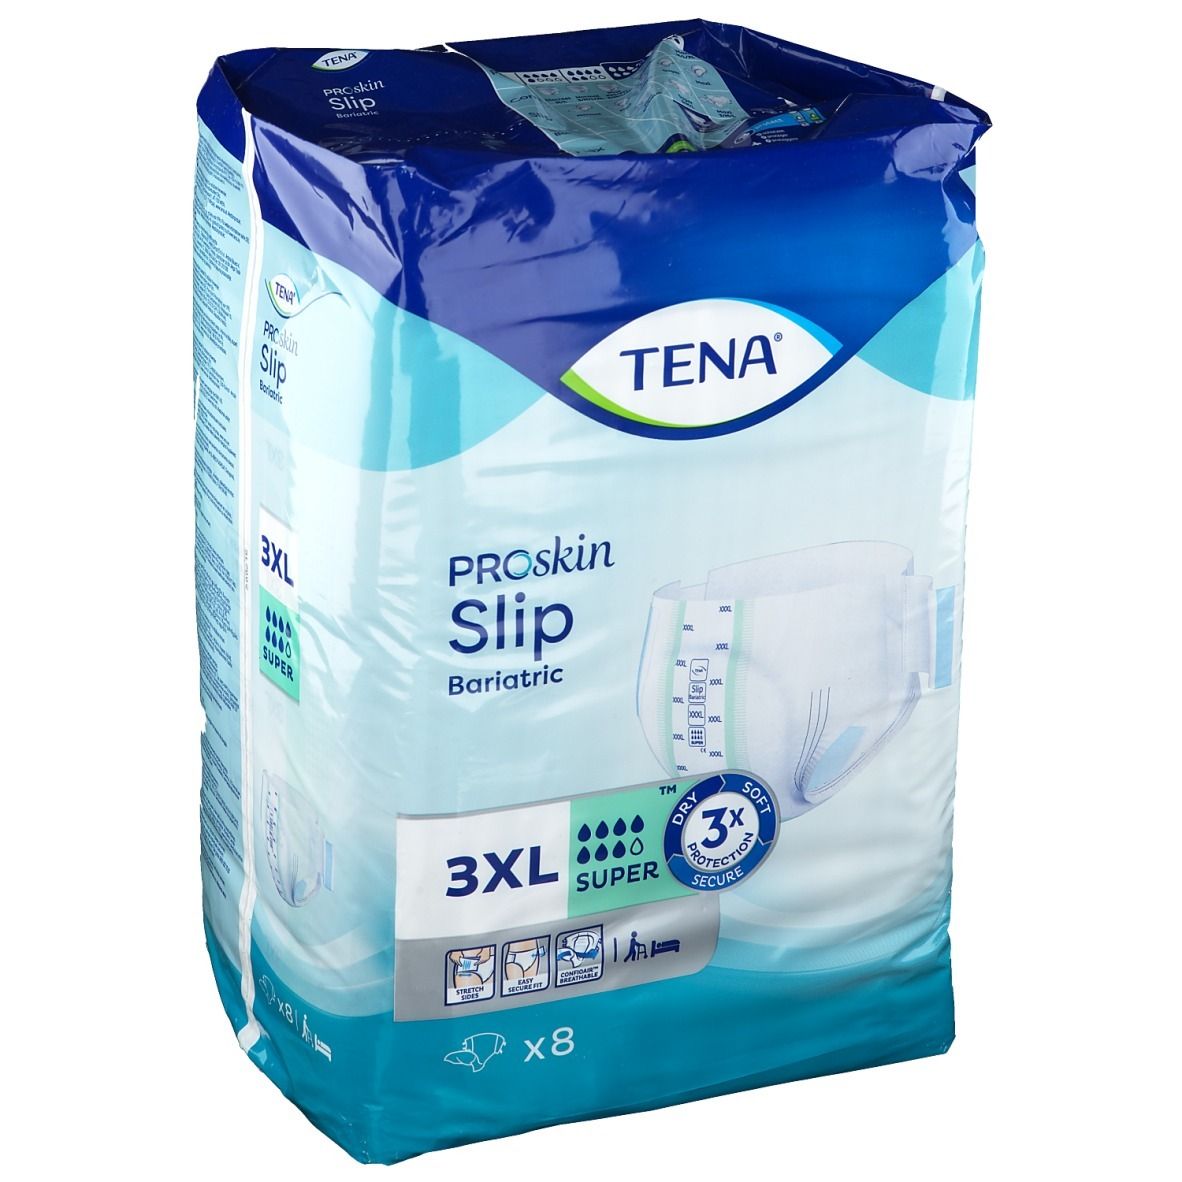 Tena® ProSkin Slip Bariatric Super 3XL